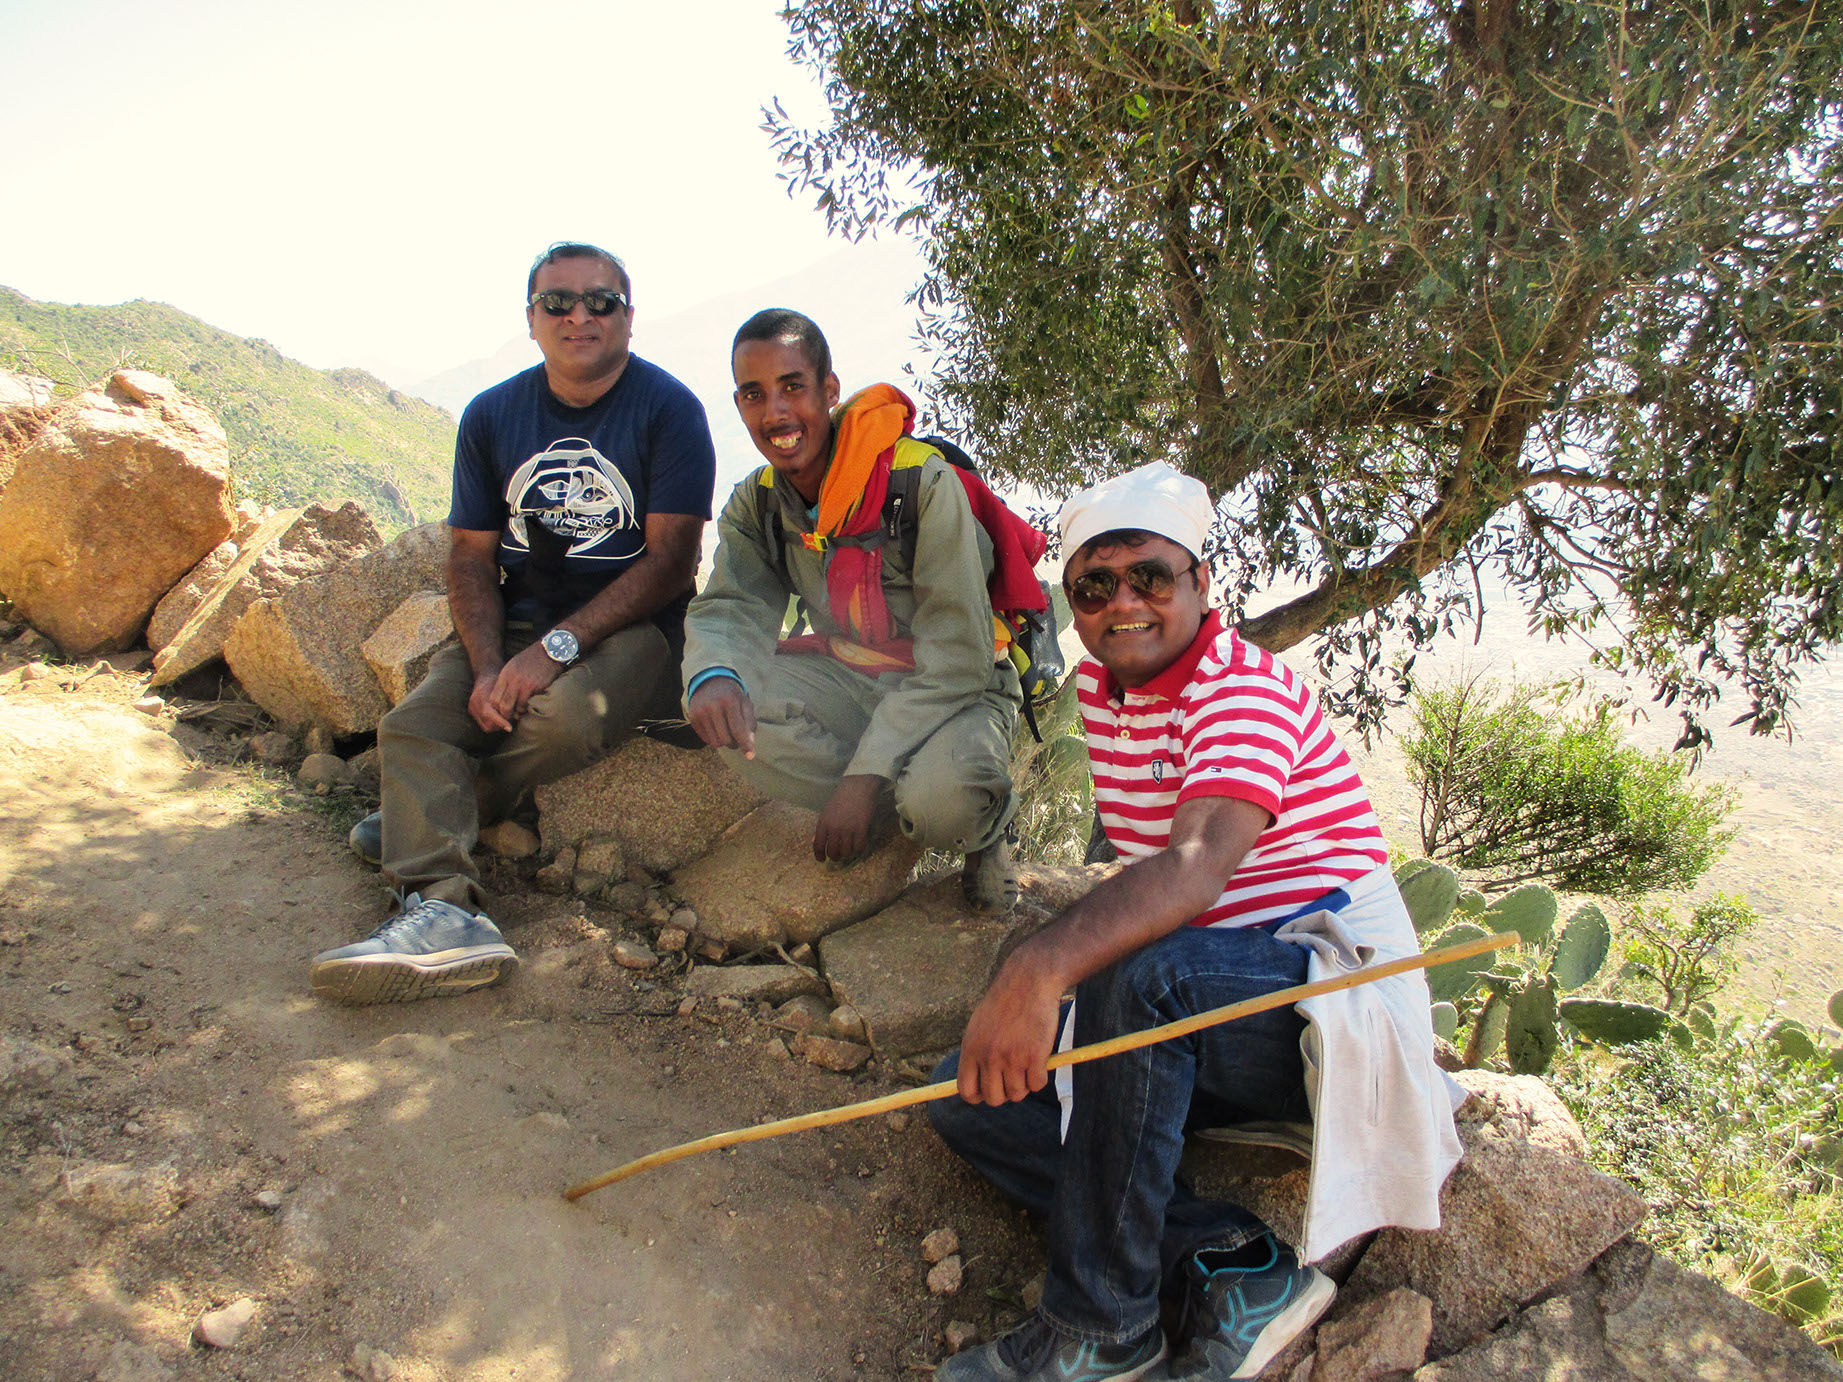 Here's Aaron with Chirag and me on the trek to Debre Bizen Monastery in Eritrea